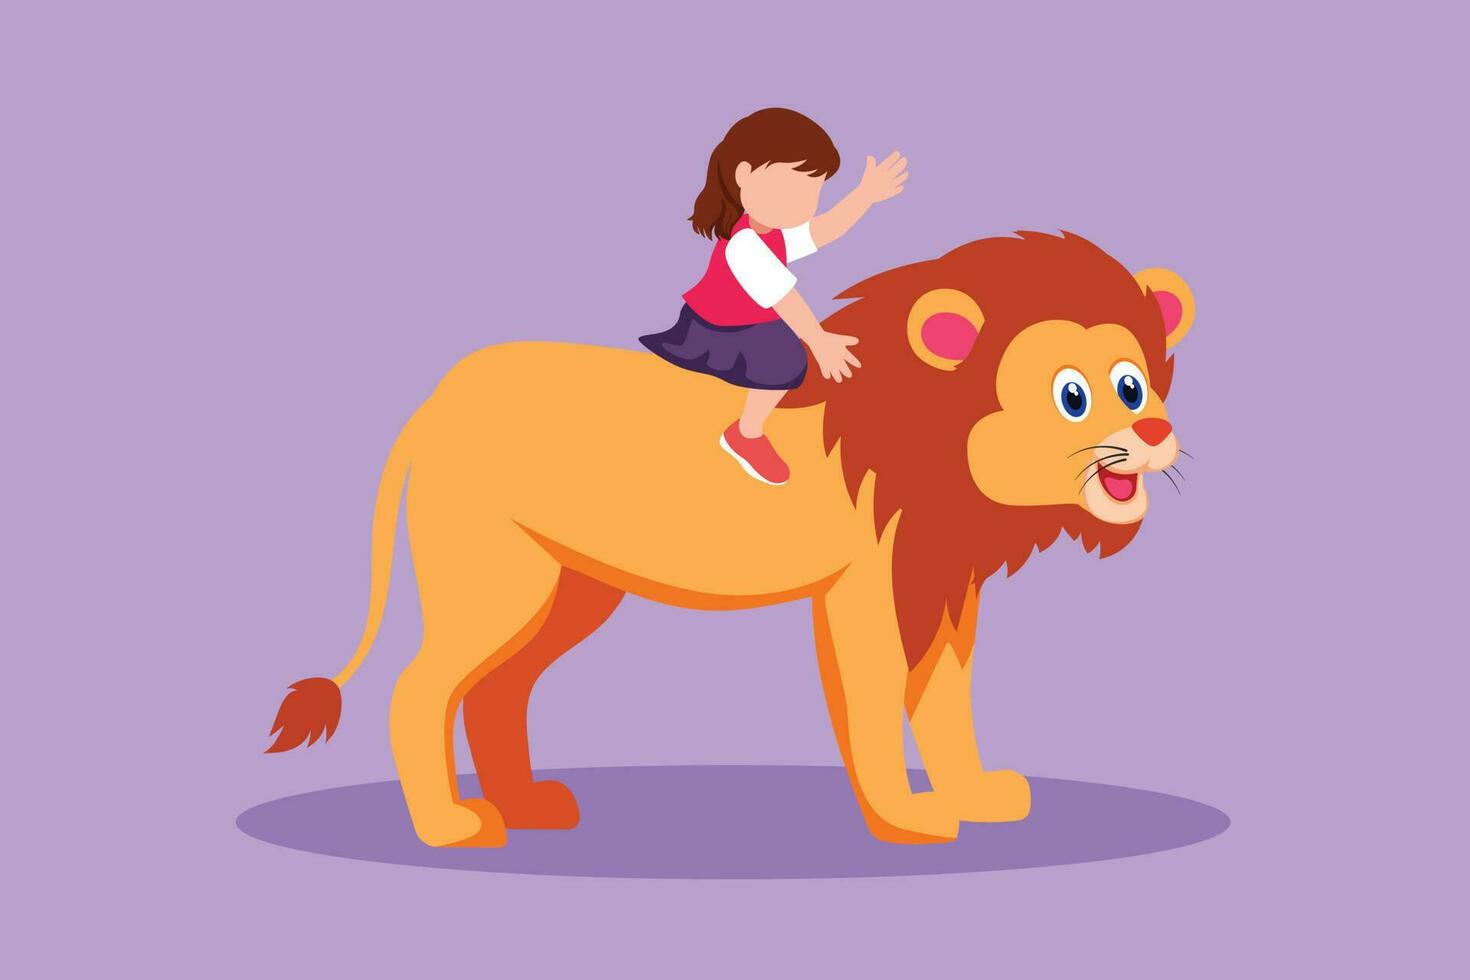 personaje plano dibujo contento pequeño niña montando león a zoo. adorable niño sentado en espalda grande león a circo evento. valiente linda niños aprendizaje a paseo bestia animal. dibujos animados diseño vector ilustración